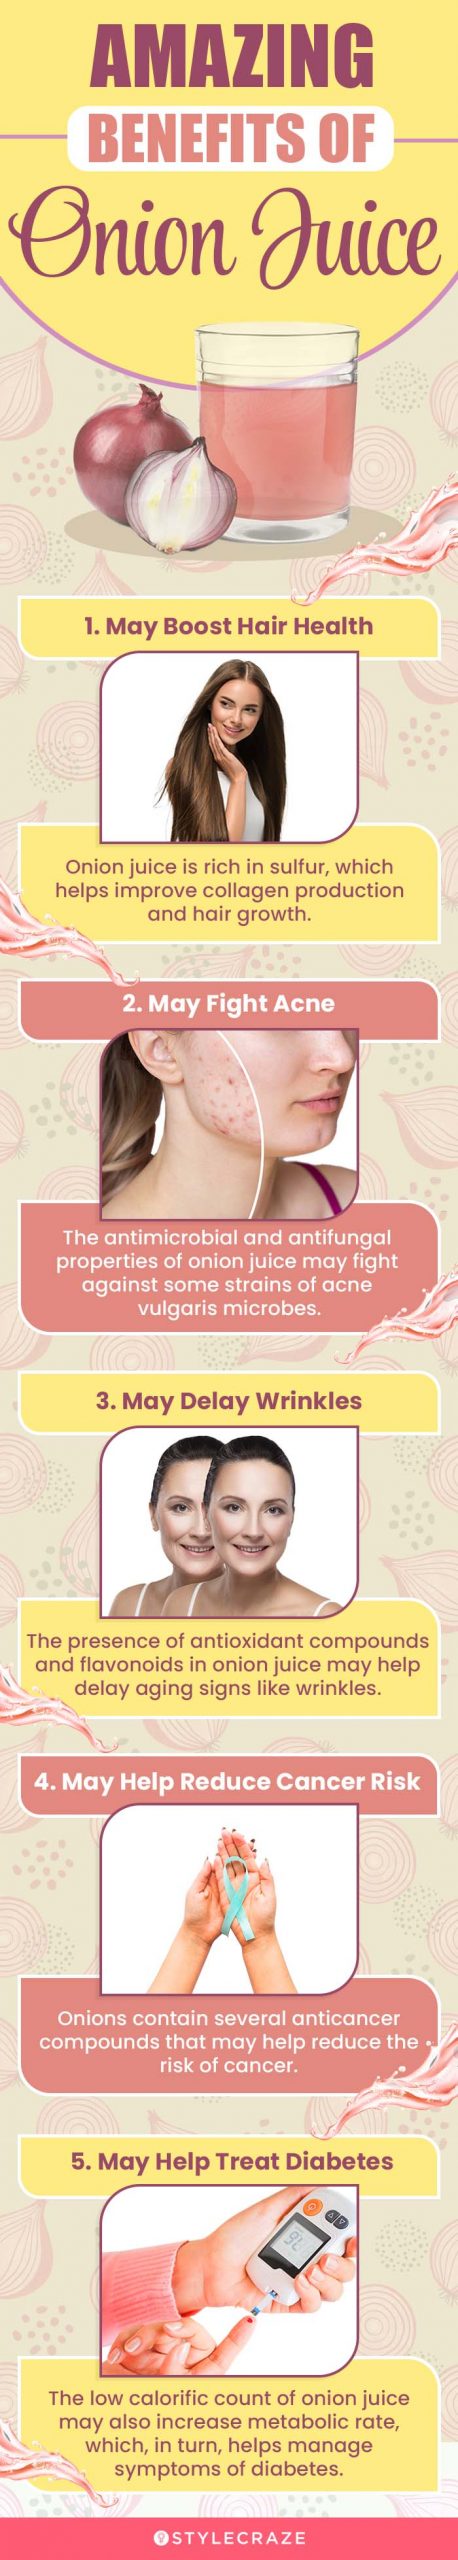 amazing benefits of onion juice (infographic)